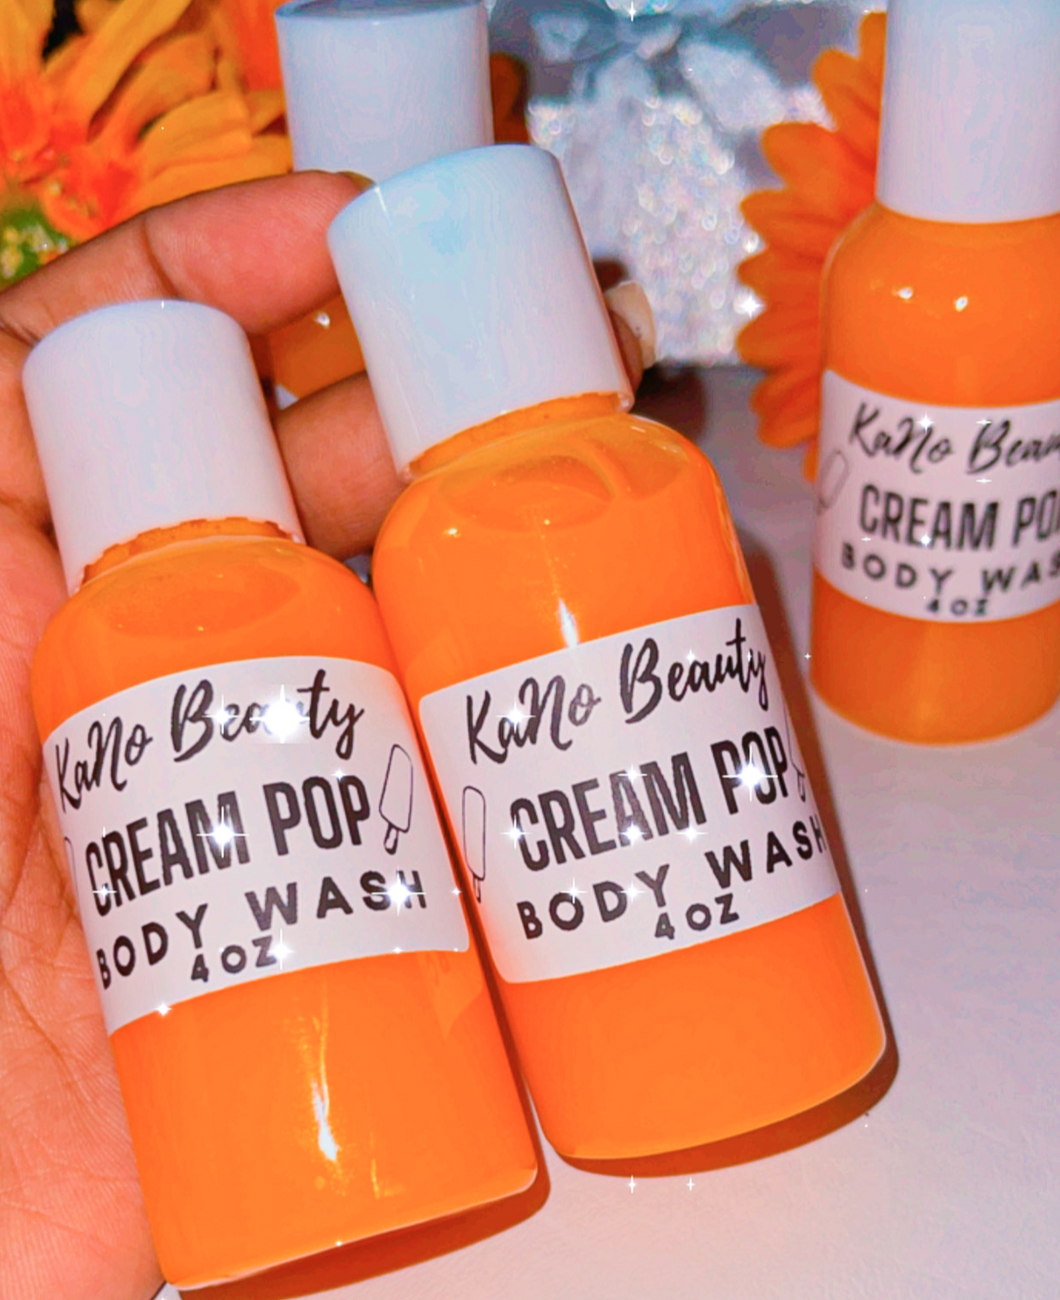 Cream Pop Body Wash